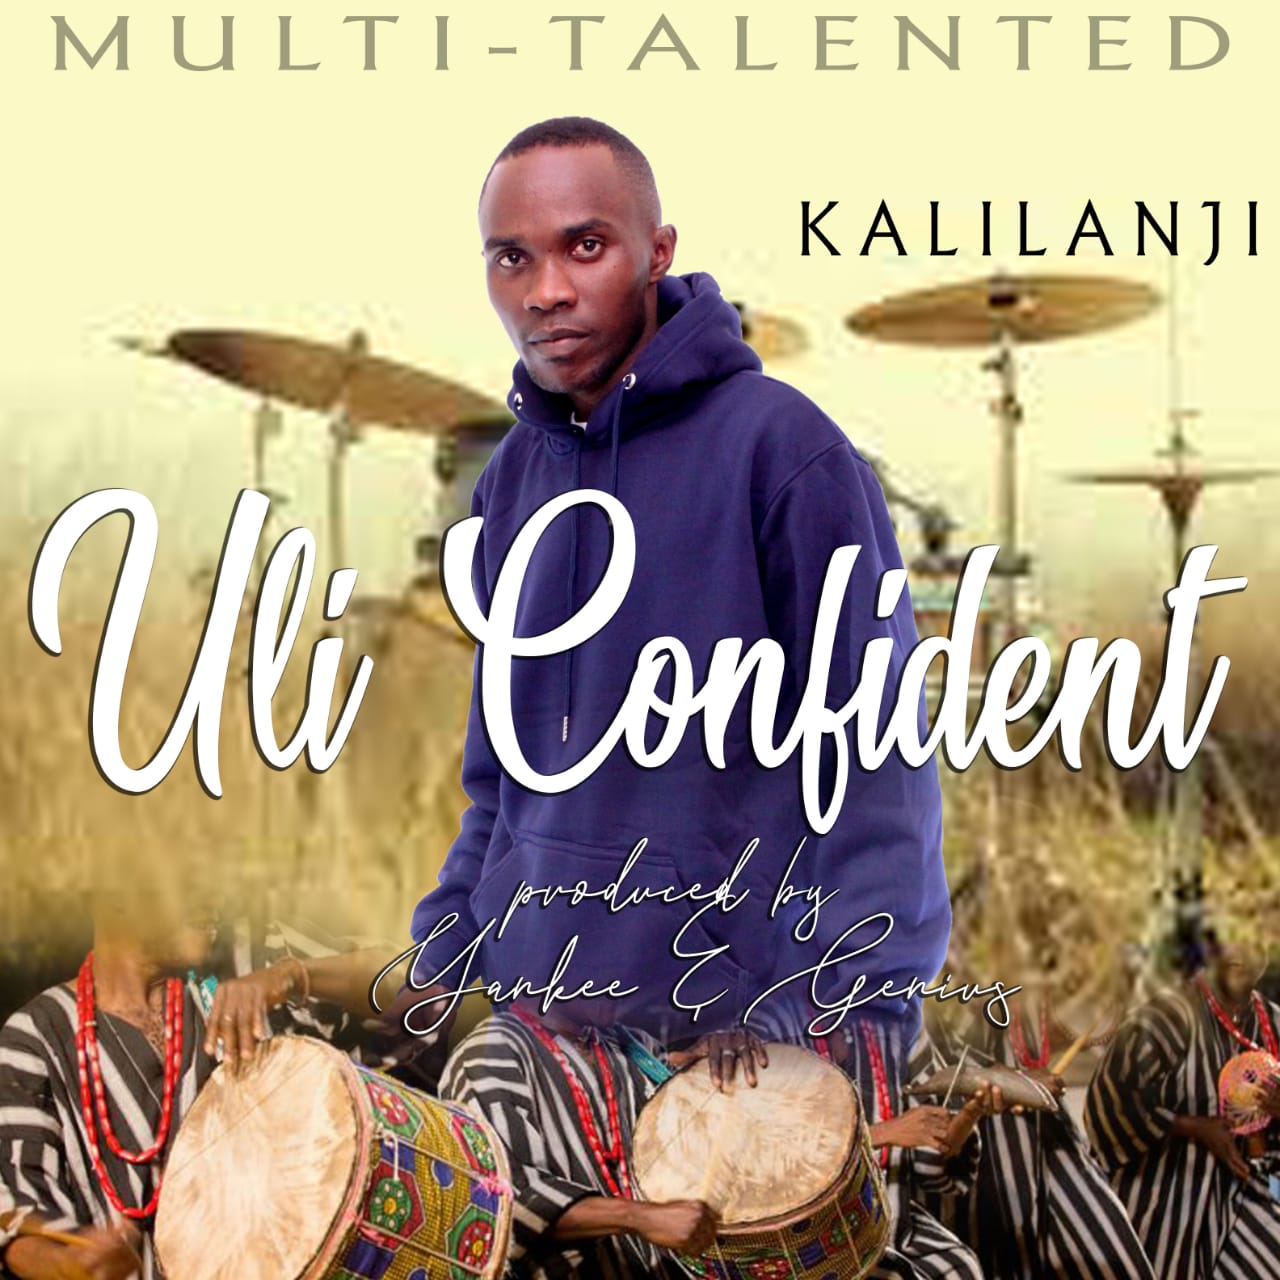 Kalilanji - Uli Confident